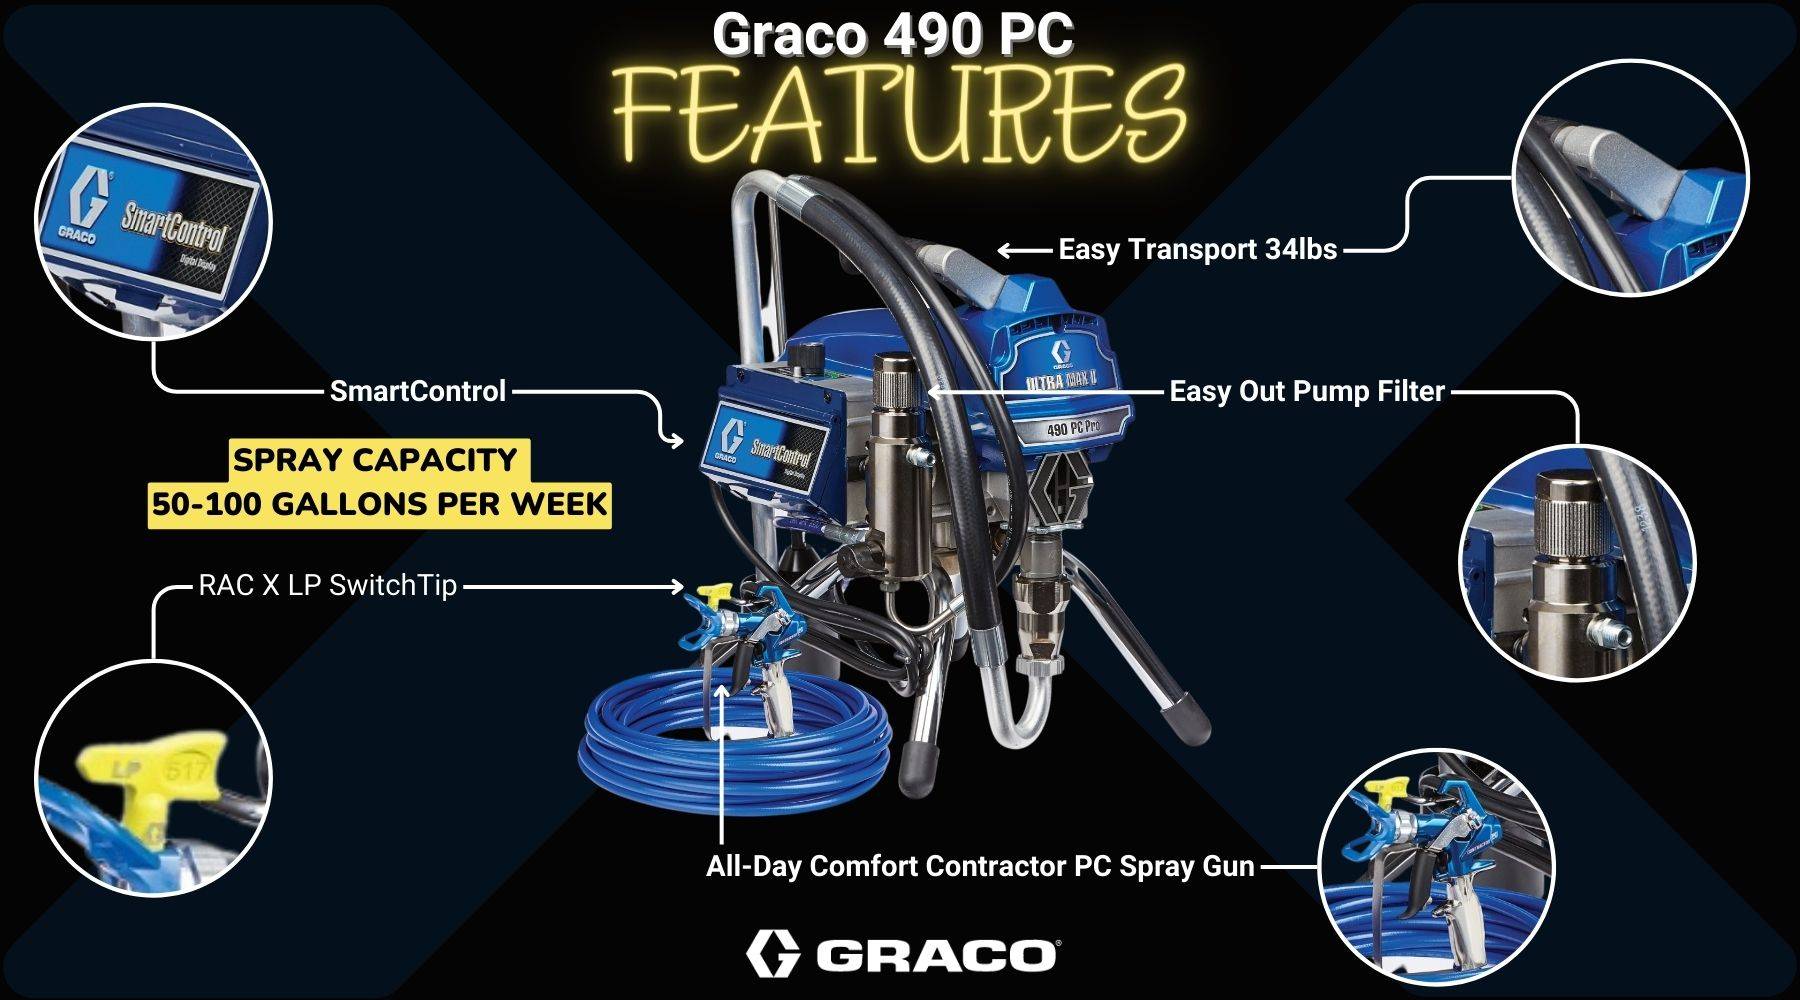 Graco 490 PC Features 17E852